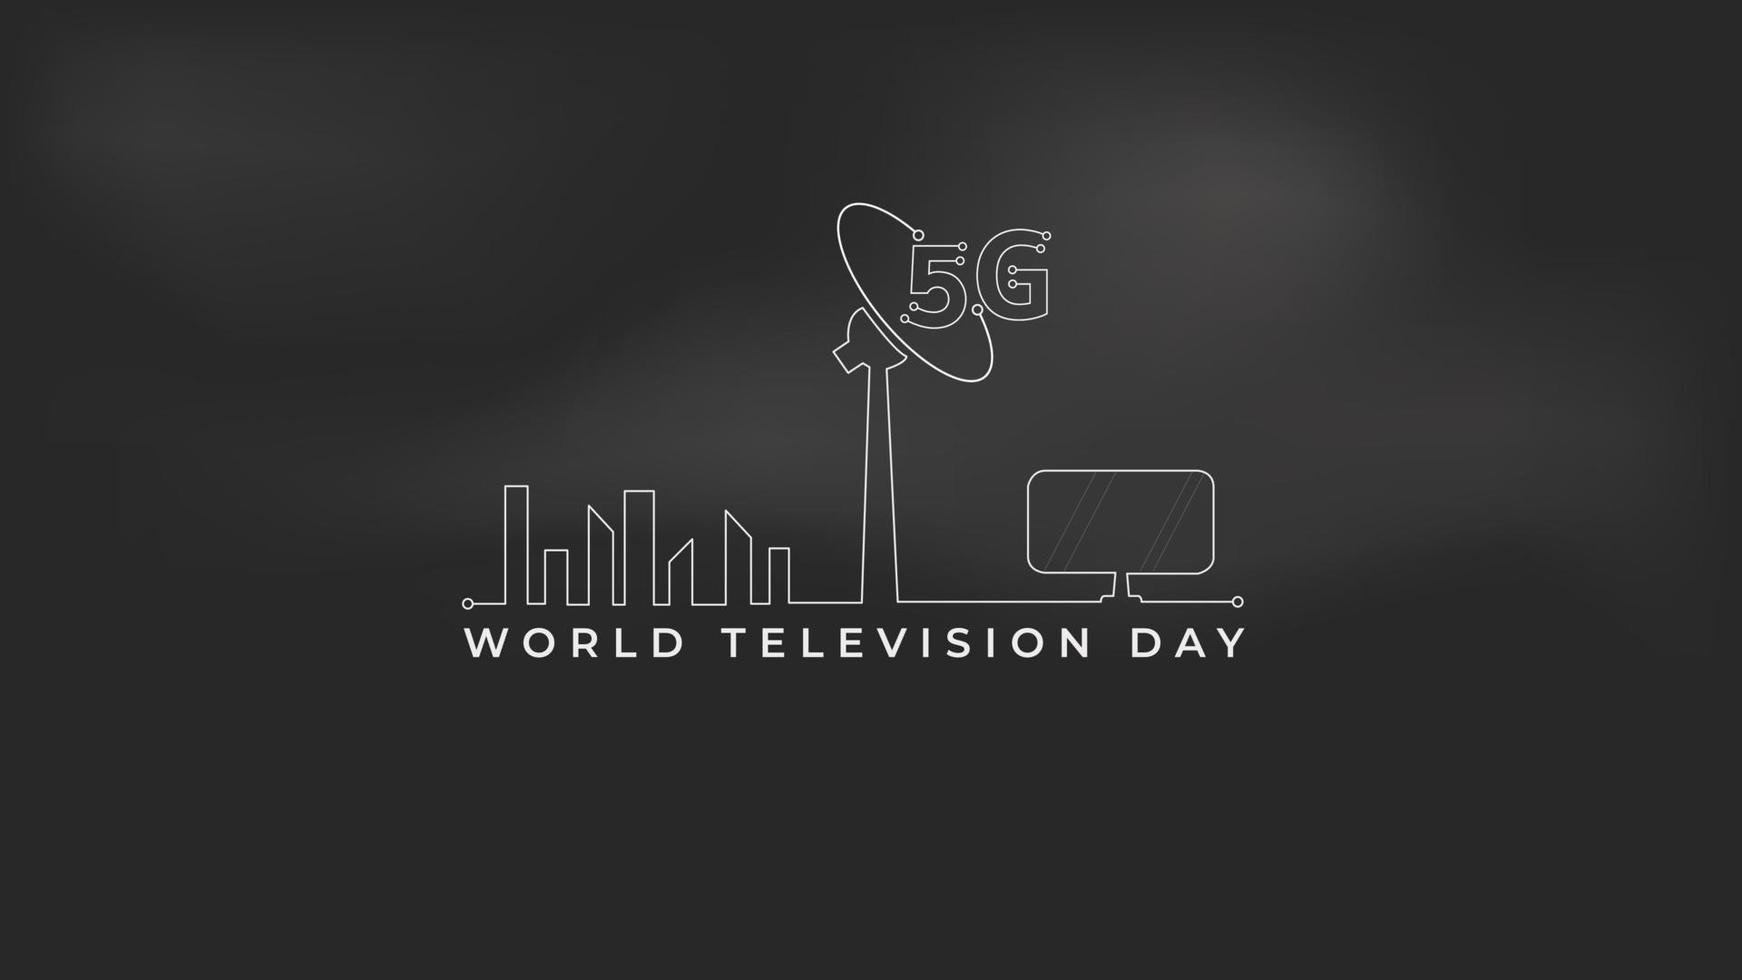 World Television Day 21 November, Line art design 4K UHD Size vector